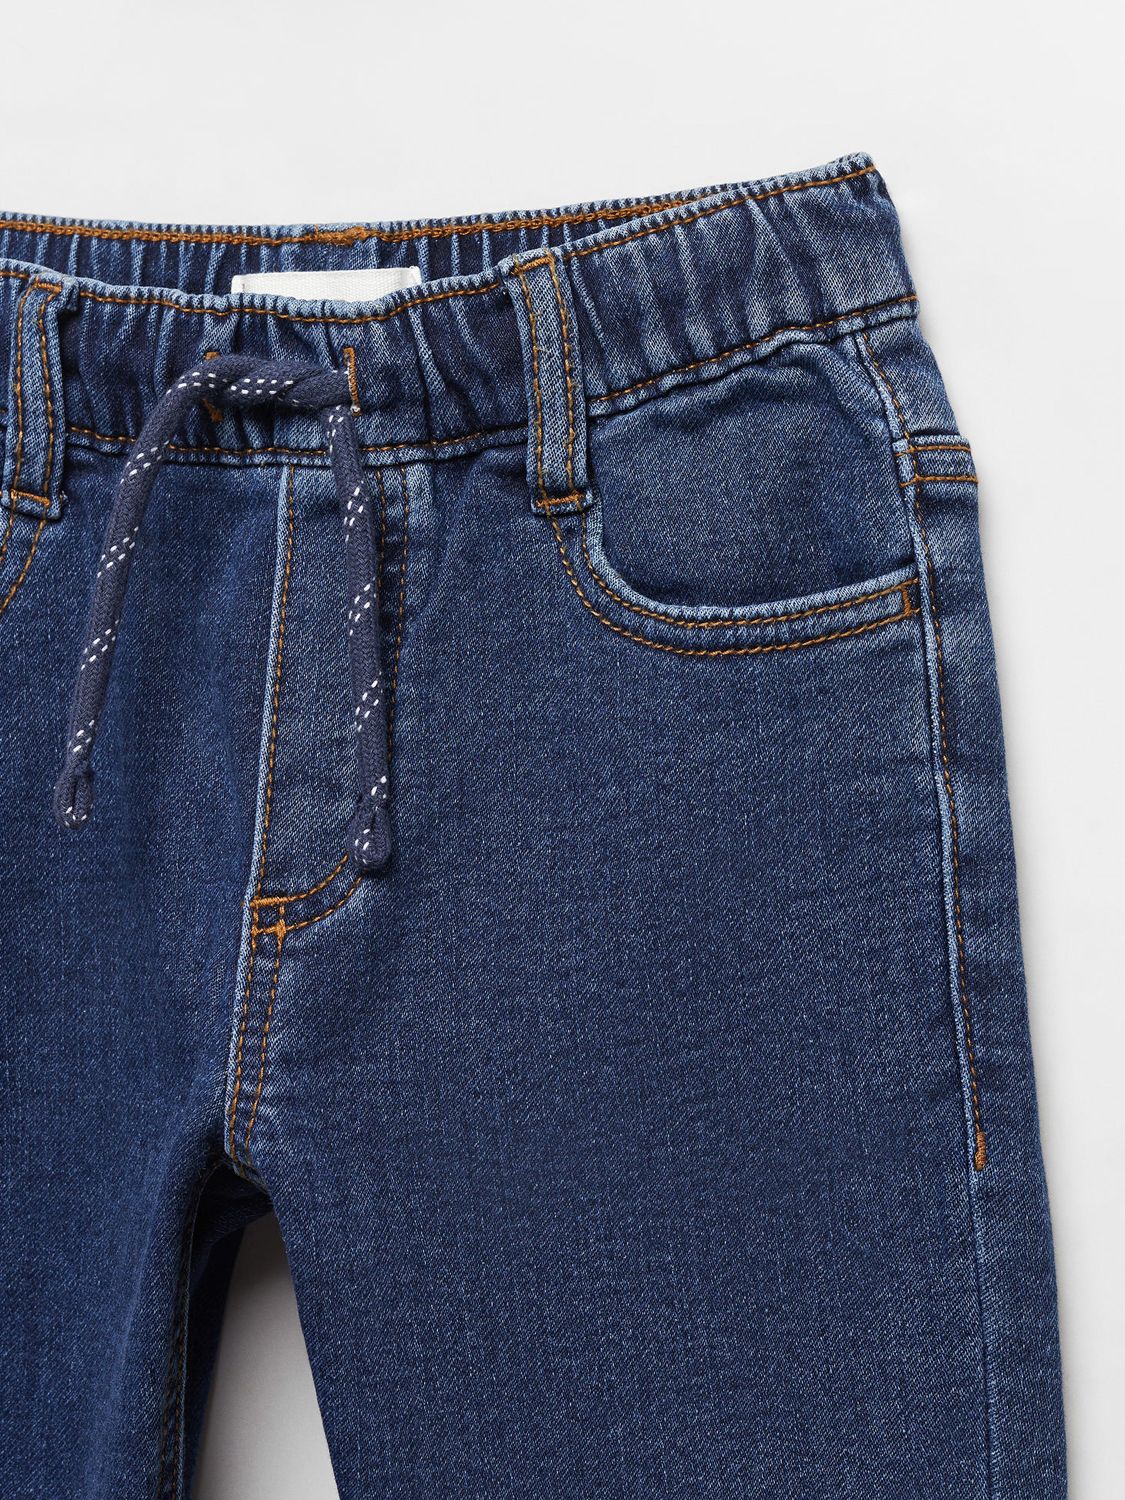 Mango Kids' Comfy Drawstring Waist Jeans, Open Blue, 10 years